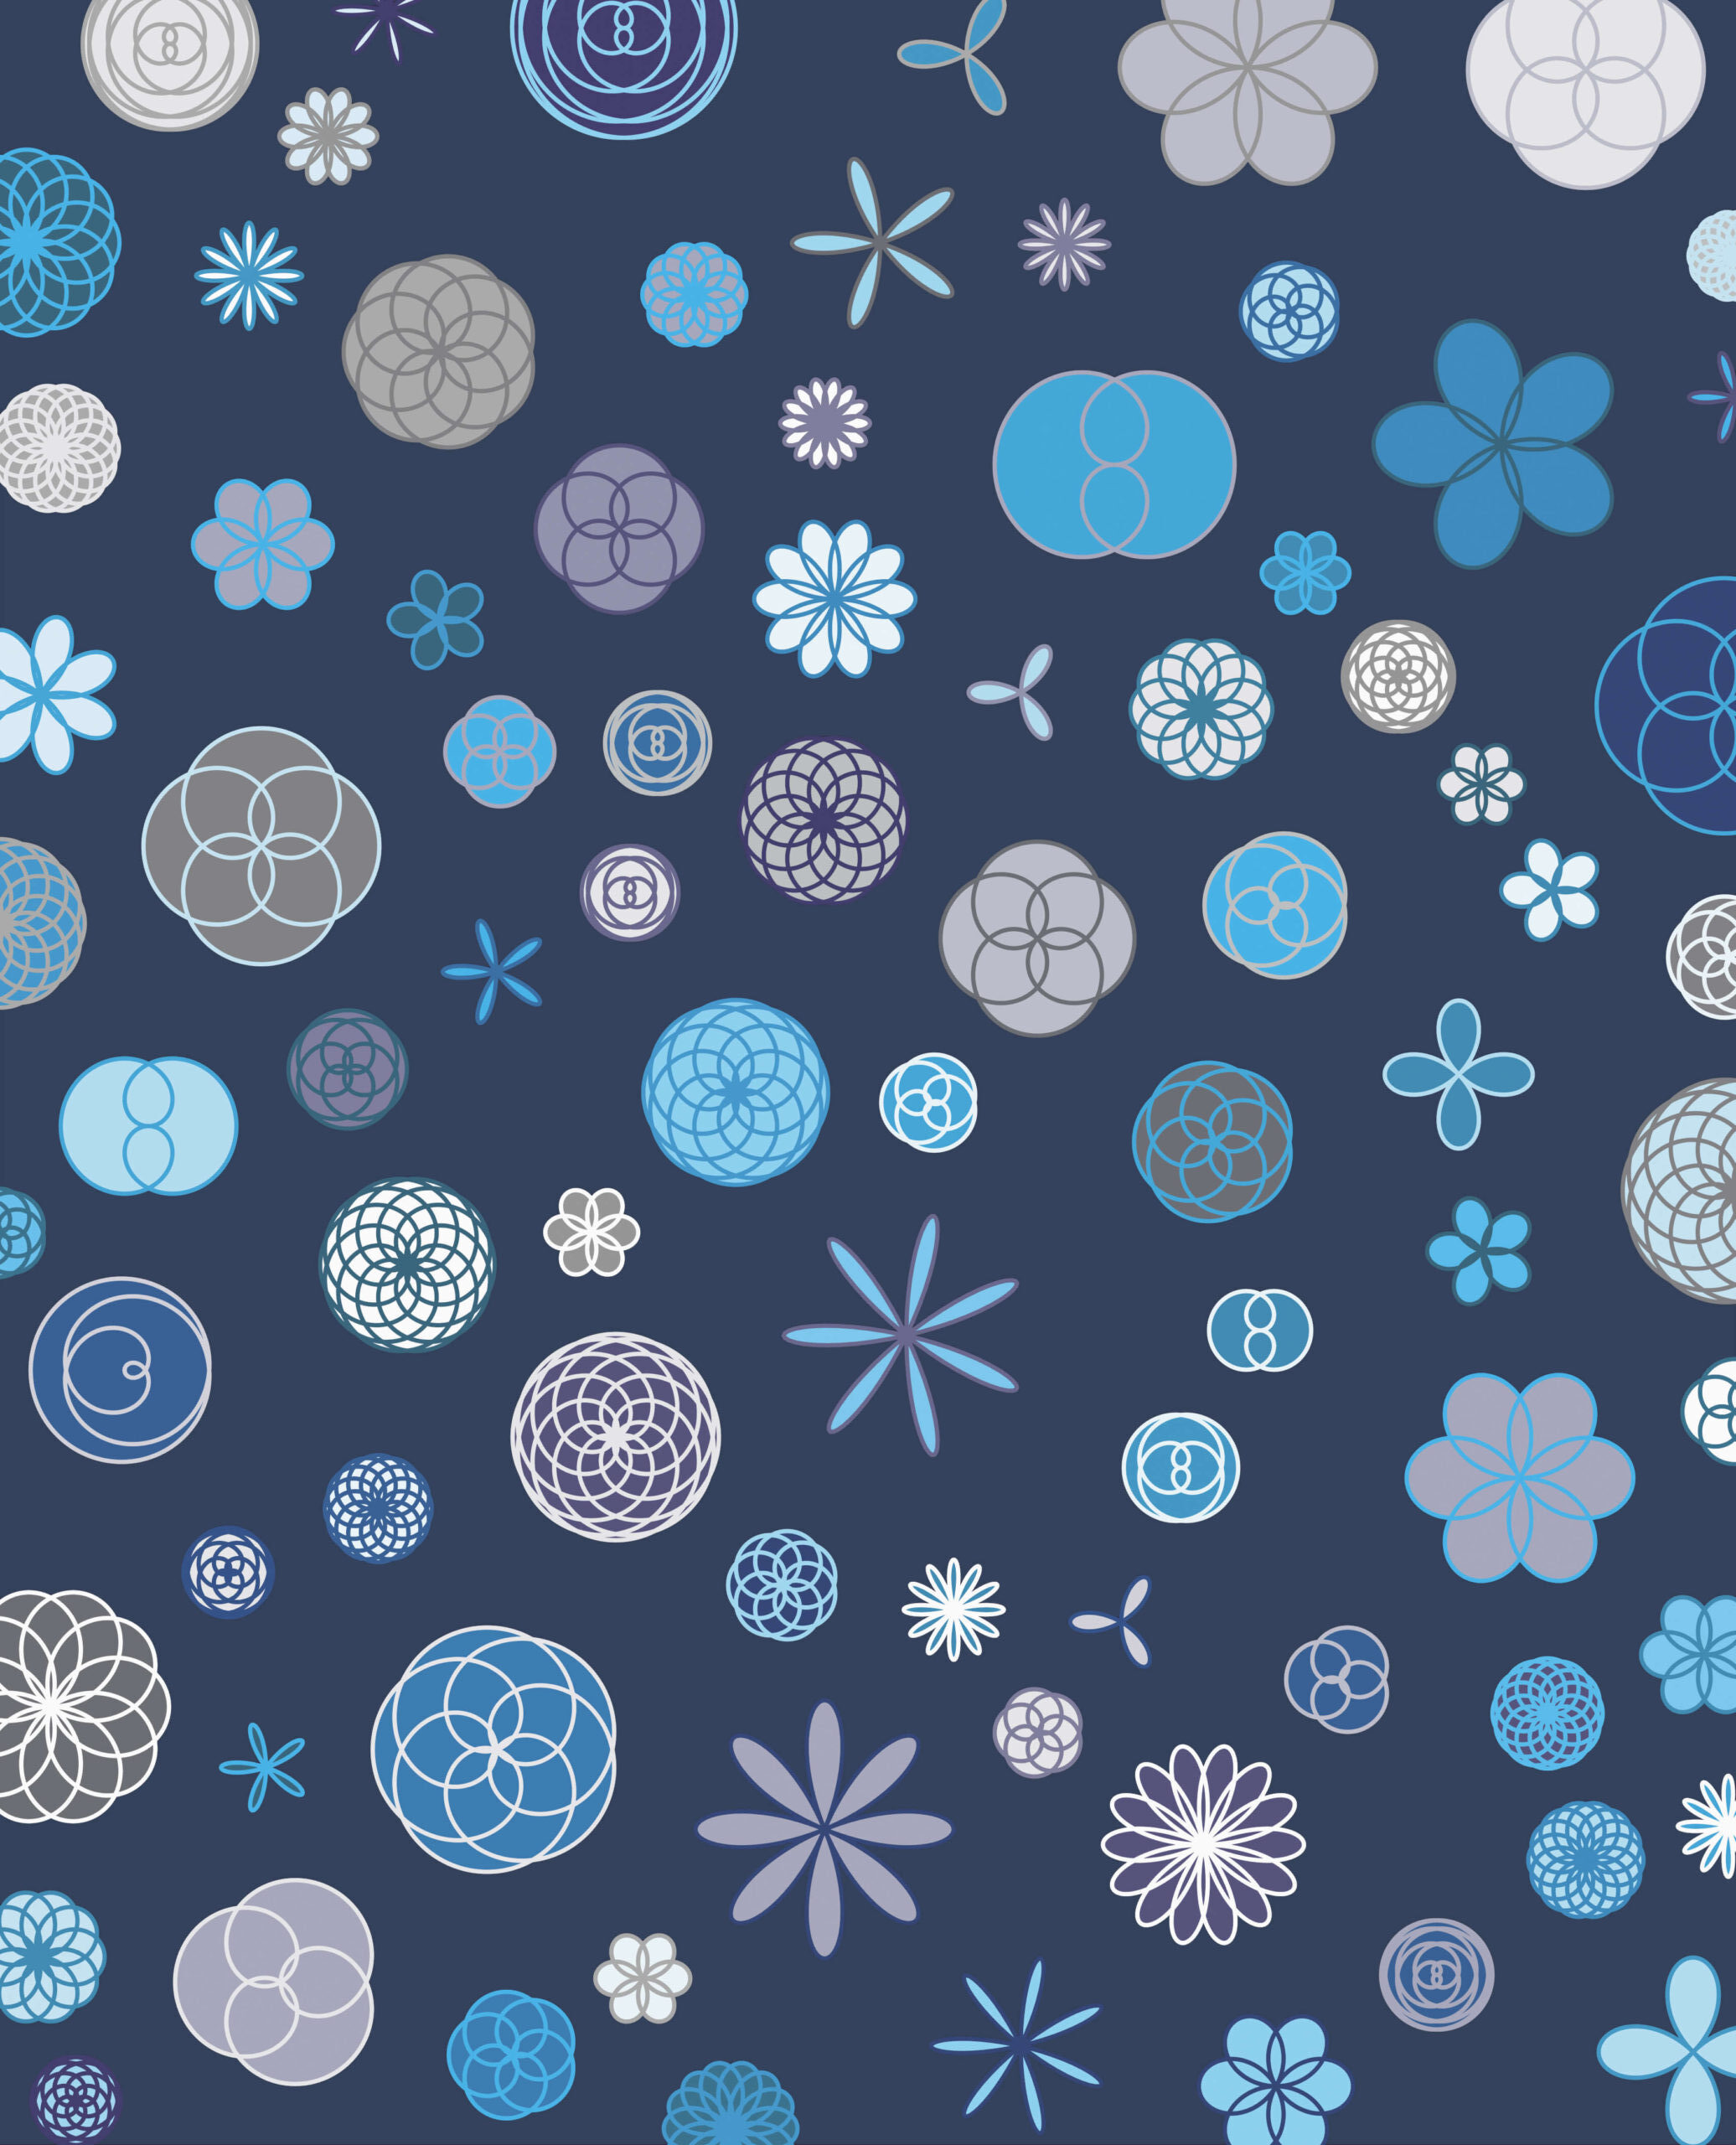 Digital rosette patterns in shades of blue.